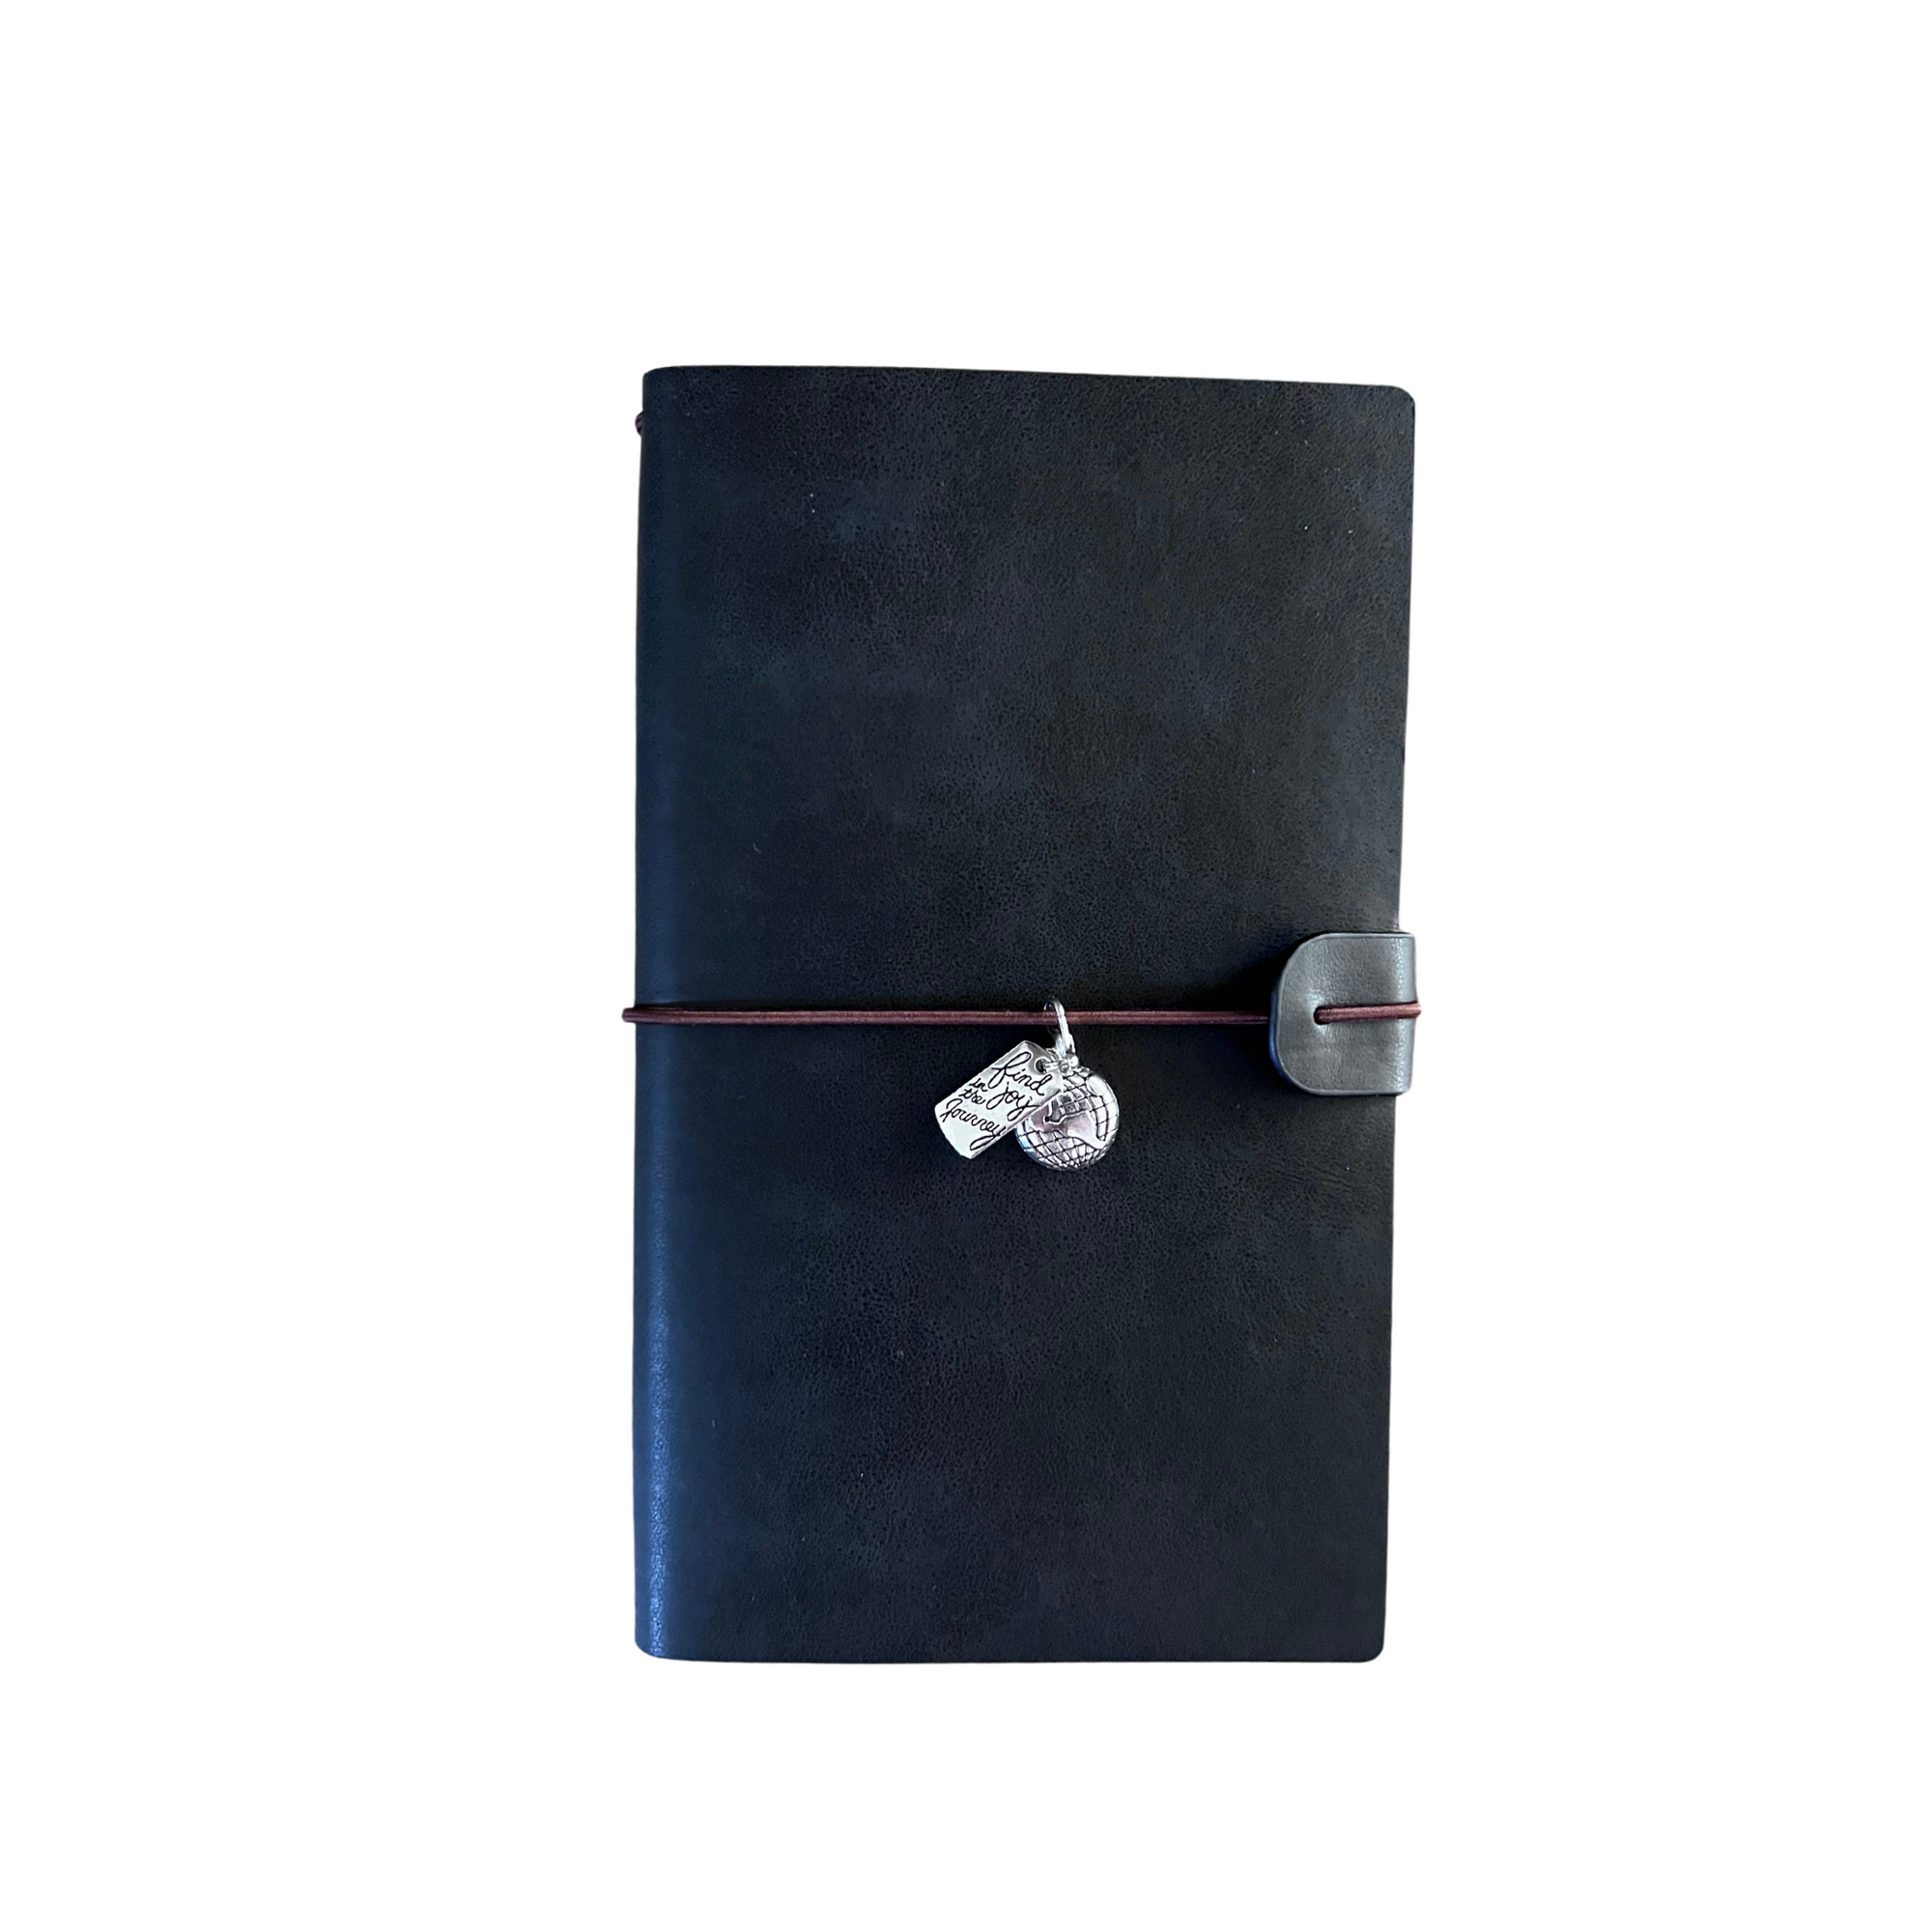 Vegan leather Traveler's Notebook-Black